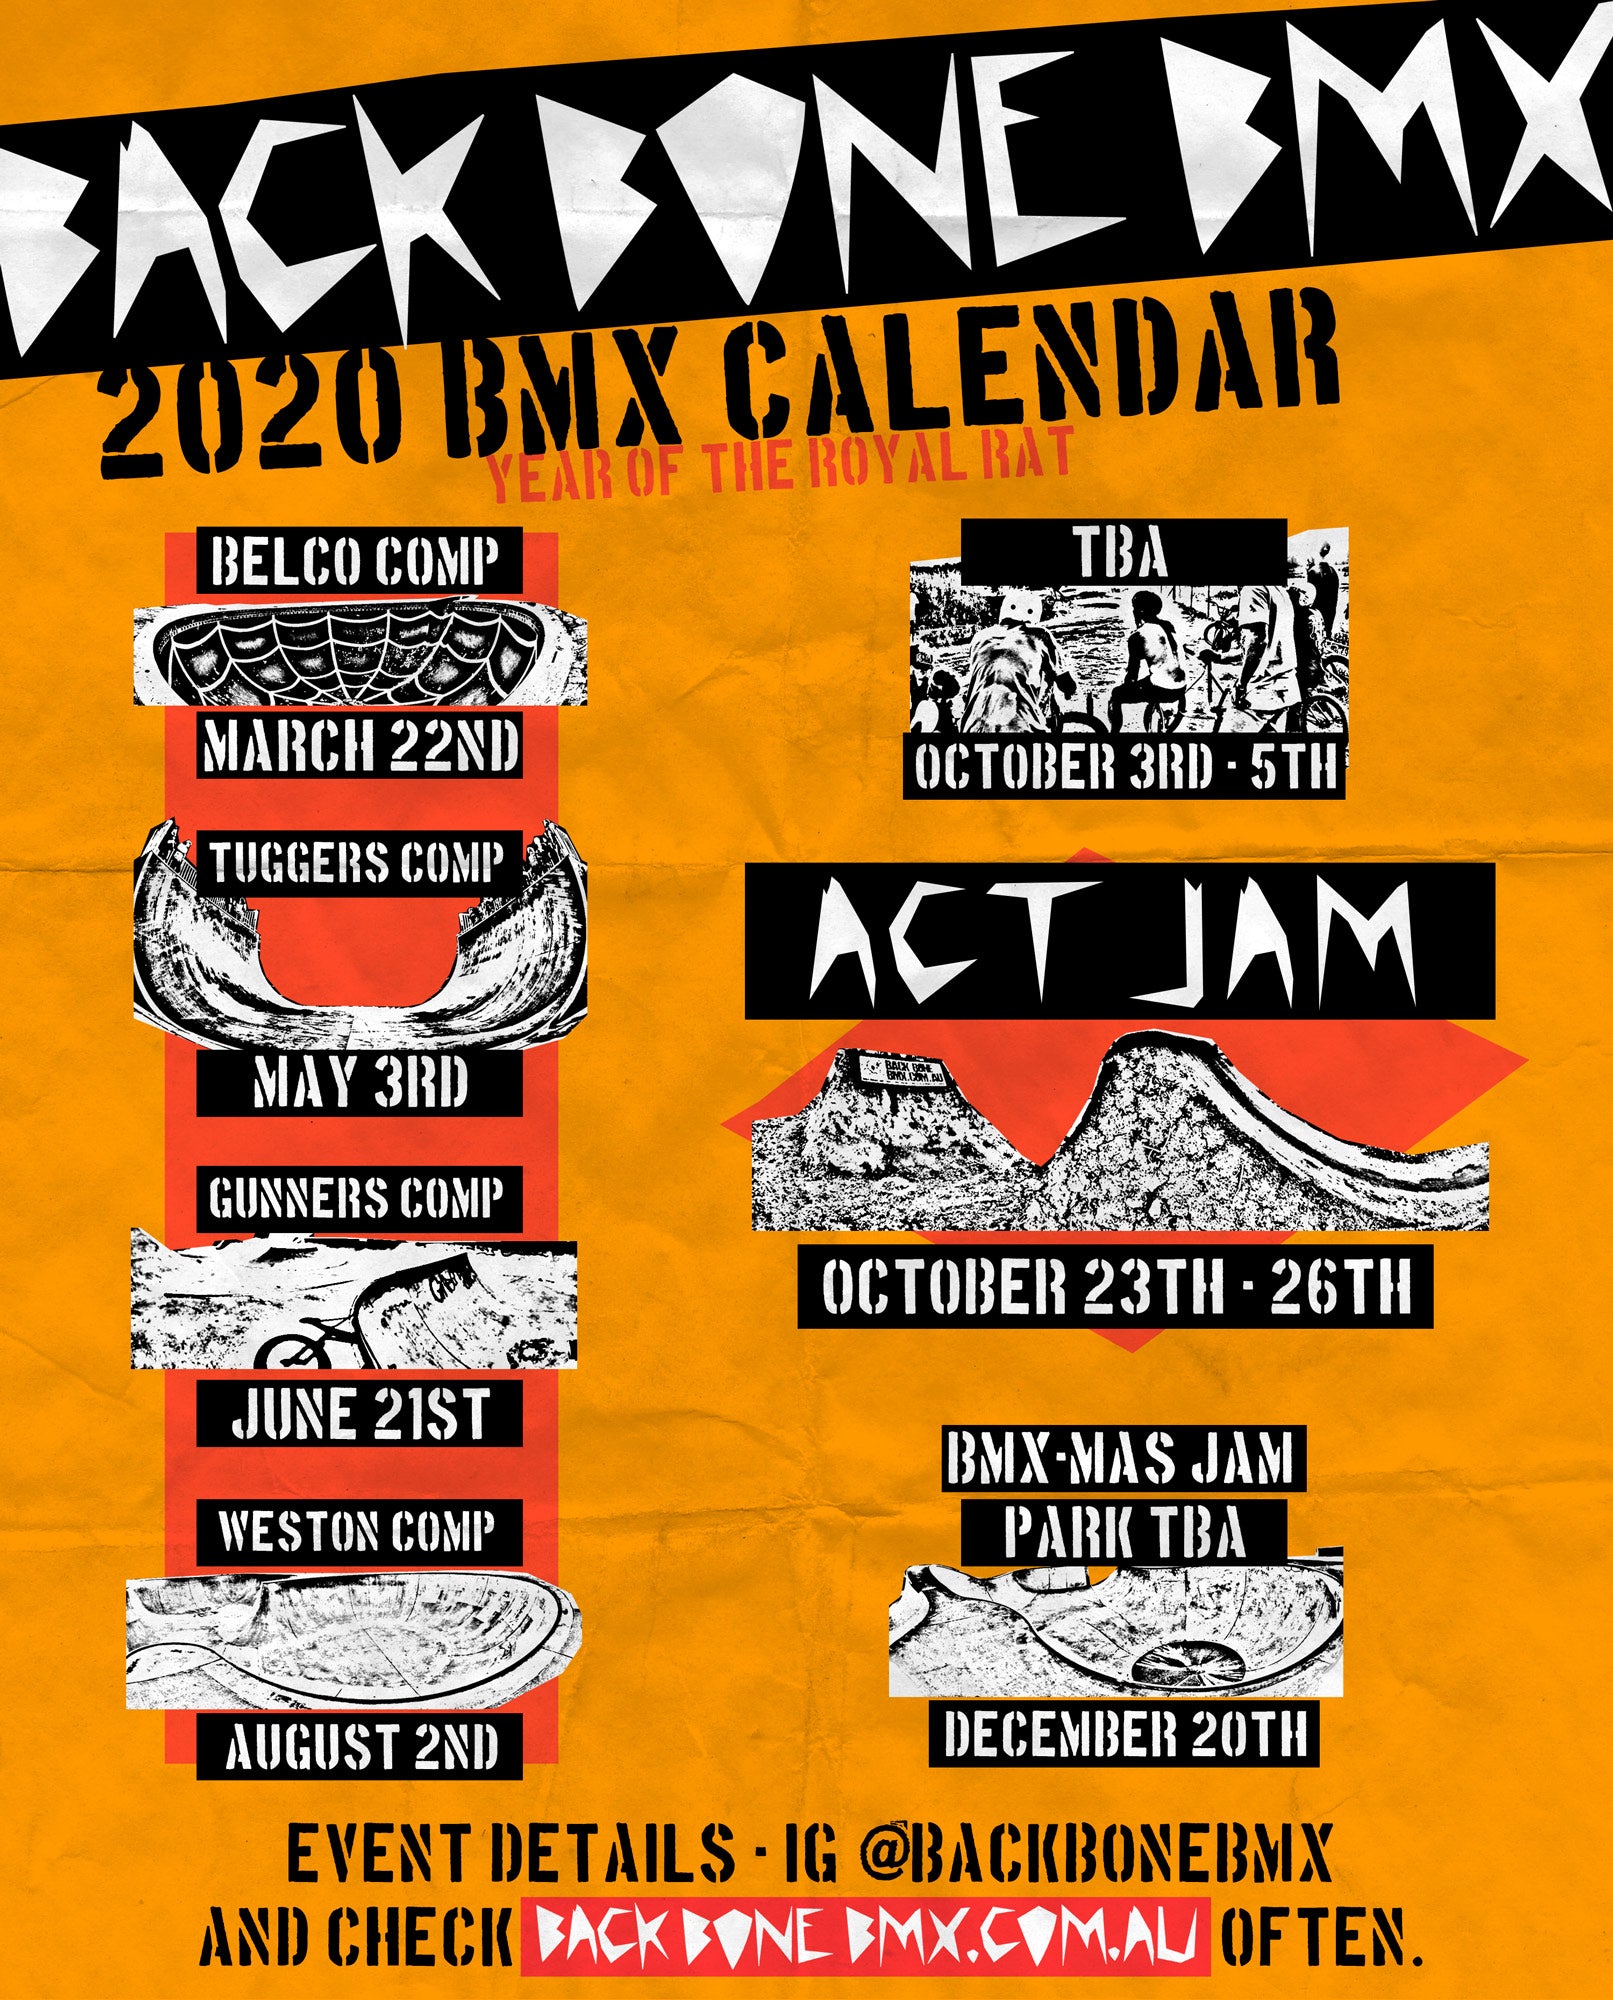 Back Bone BMX events calendar 2020